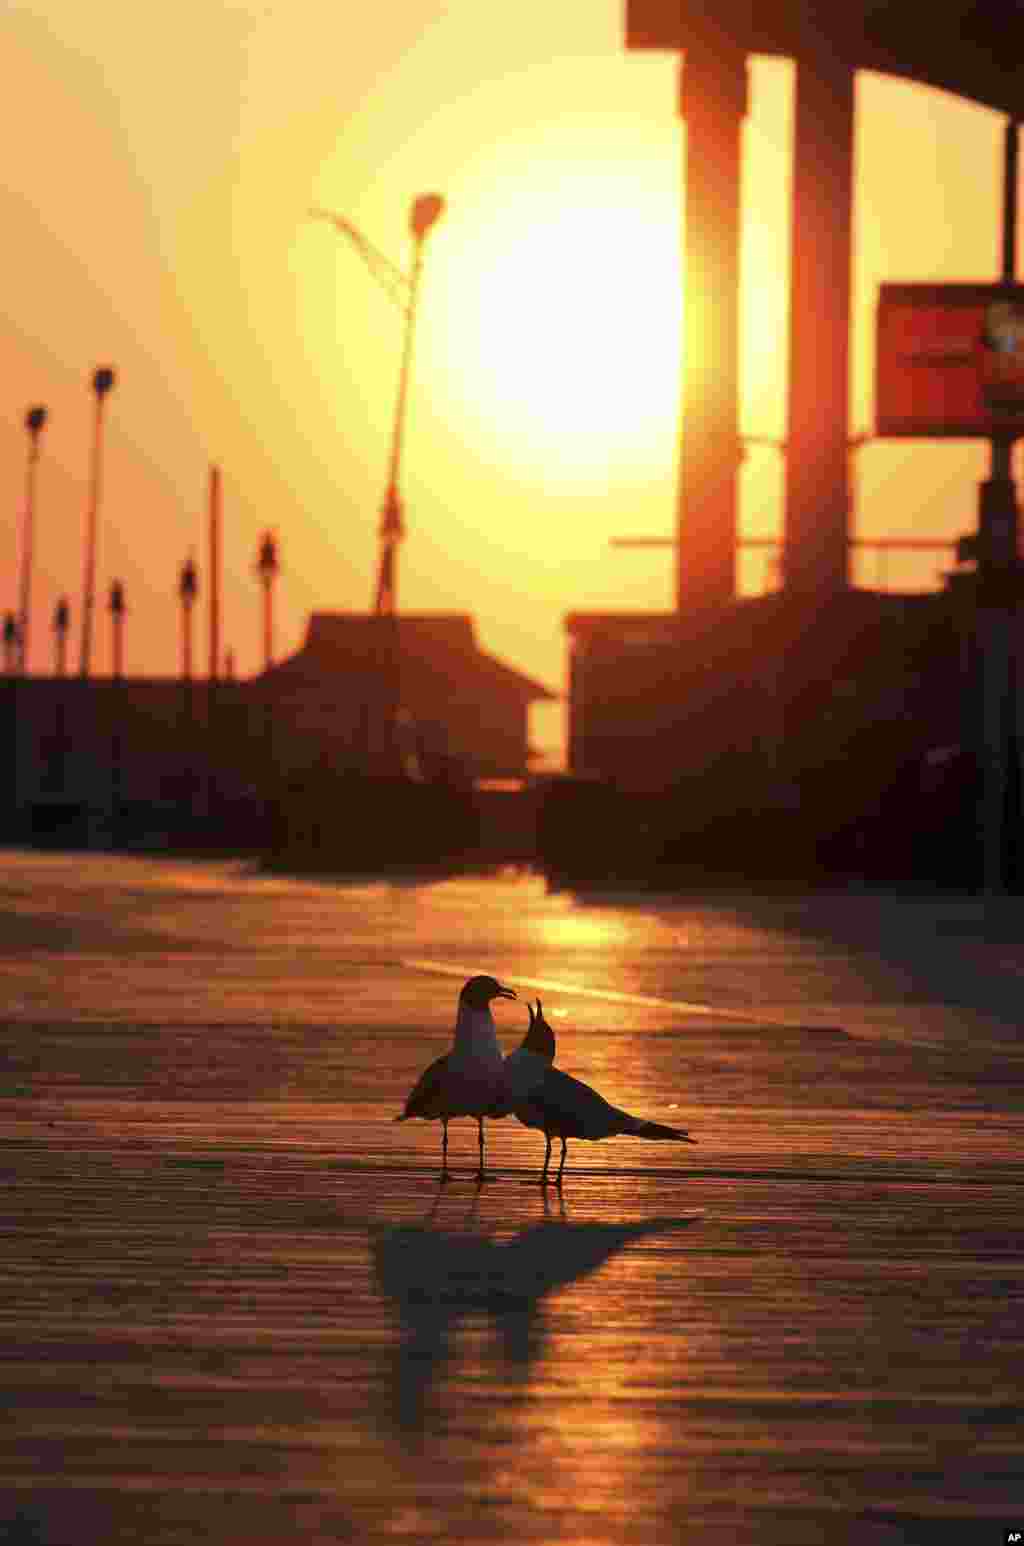 The sun rises over the Boardwalk in Atlantic City, N.J.